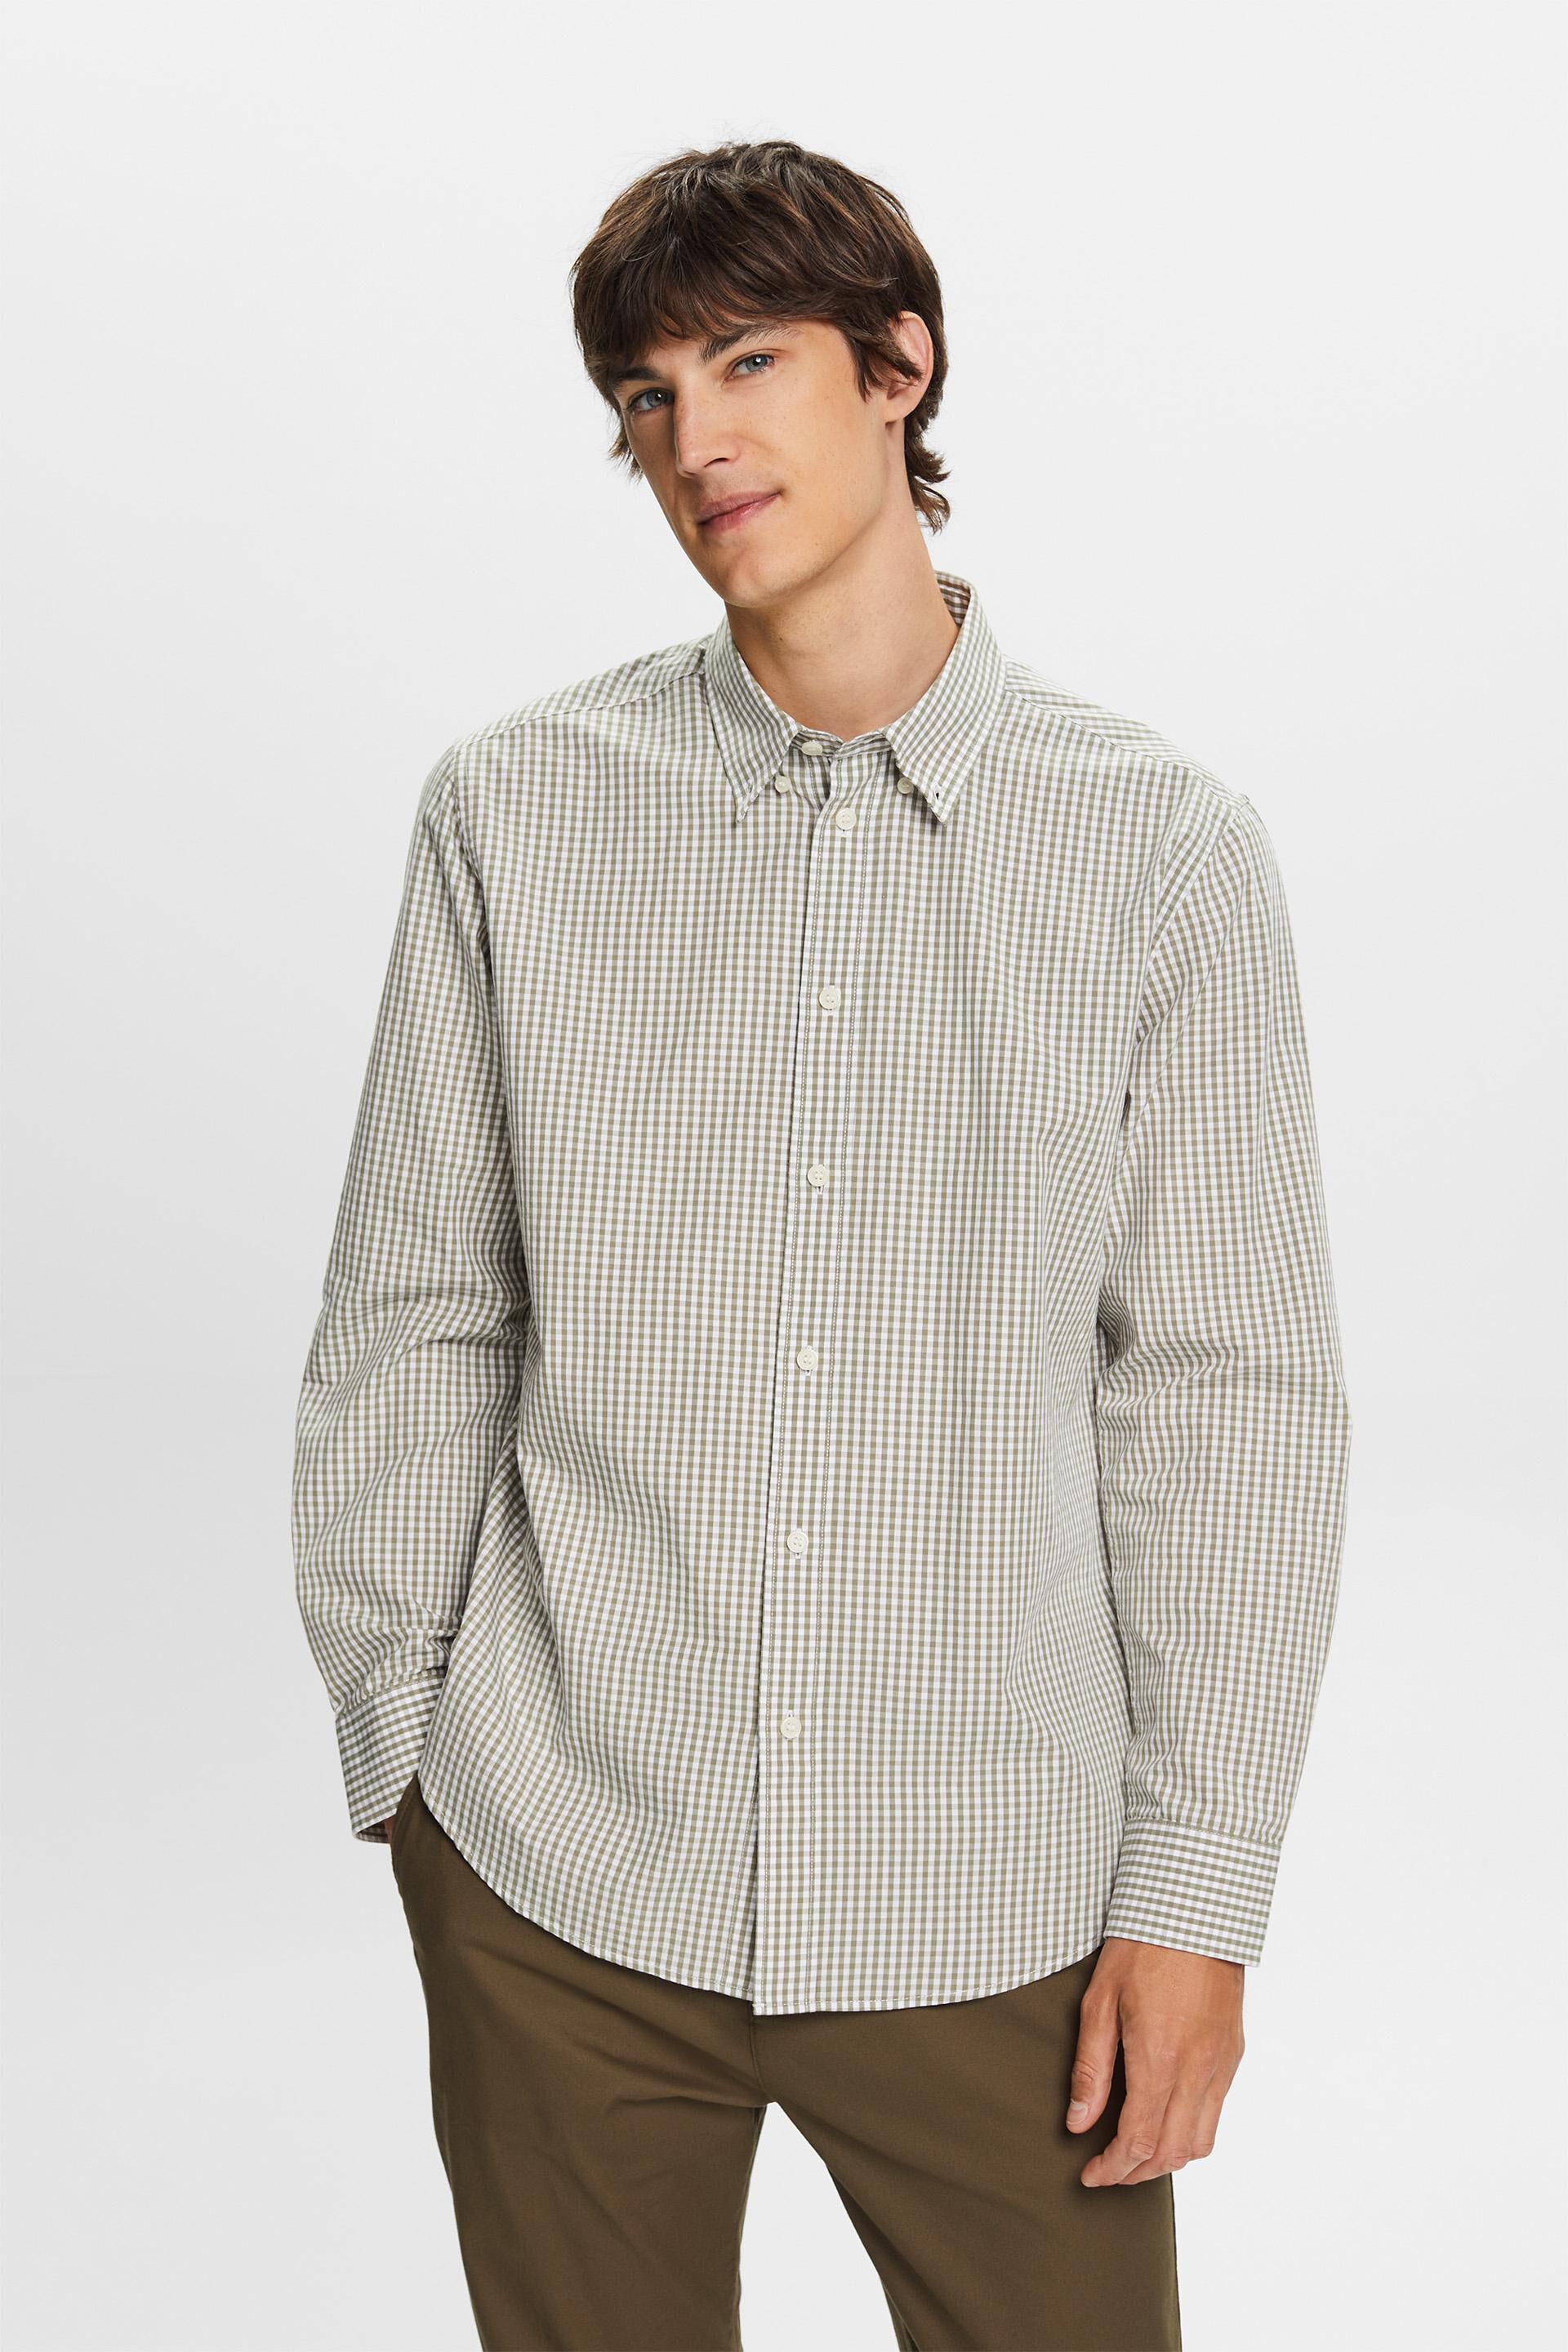 Esprit 100% cotton Vichy shirt, button-down